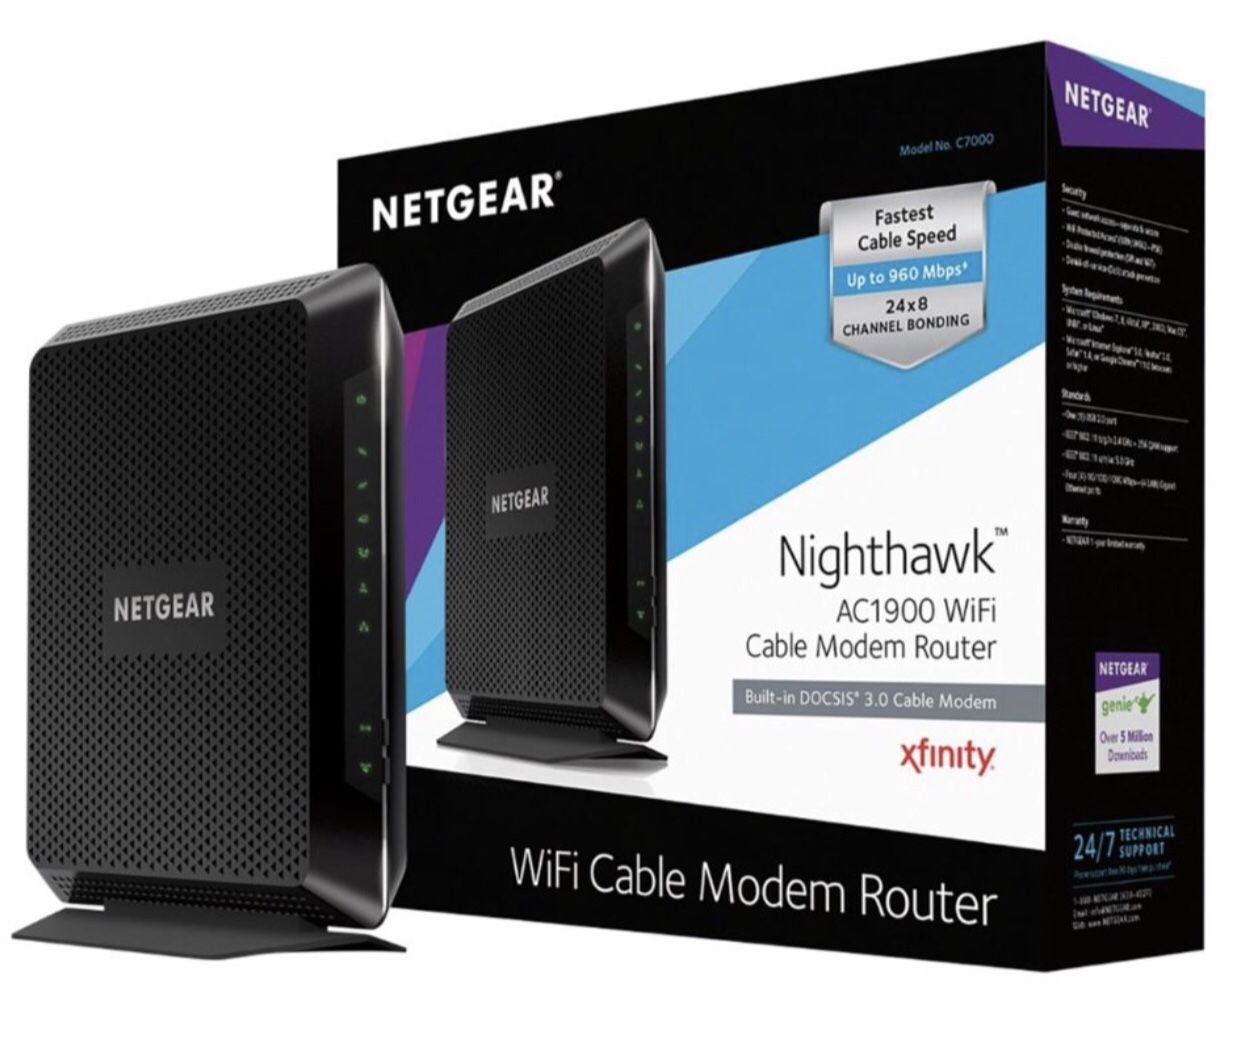 NETGEAR Nighthawk Cable Modem Router Model C7000v2